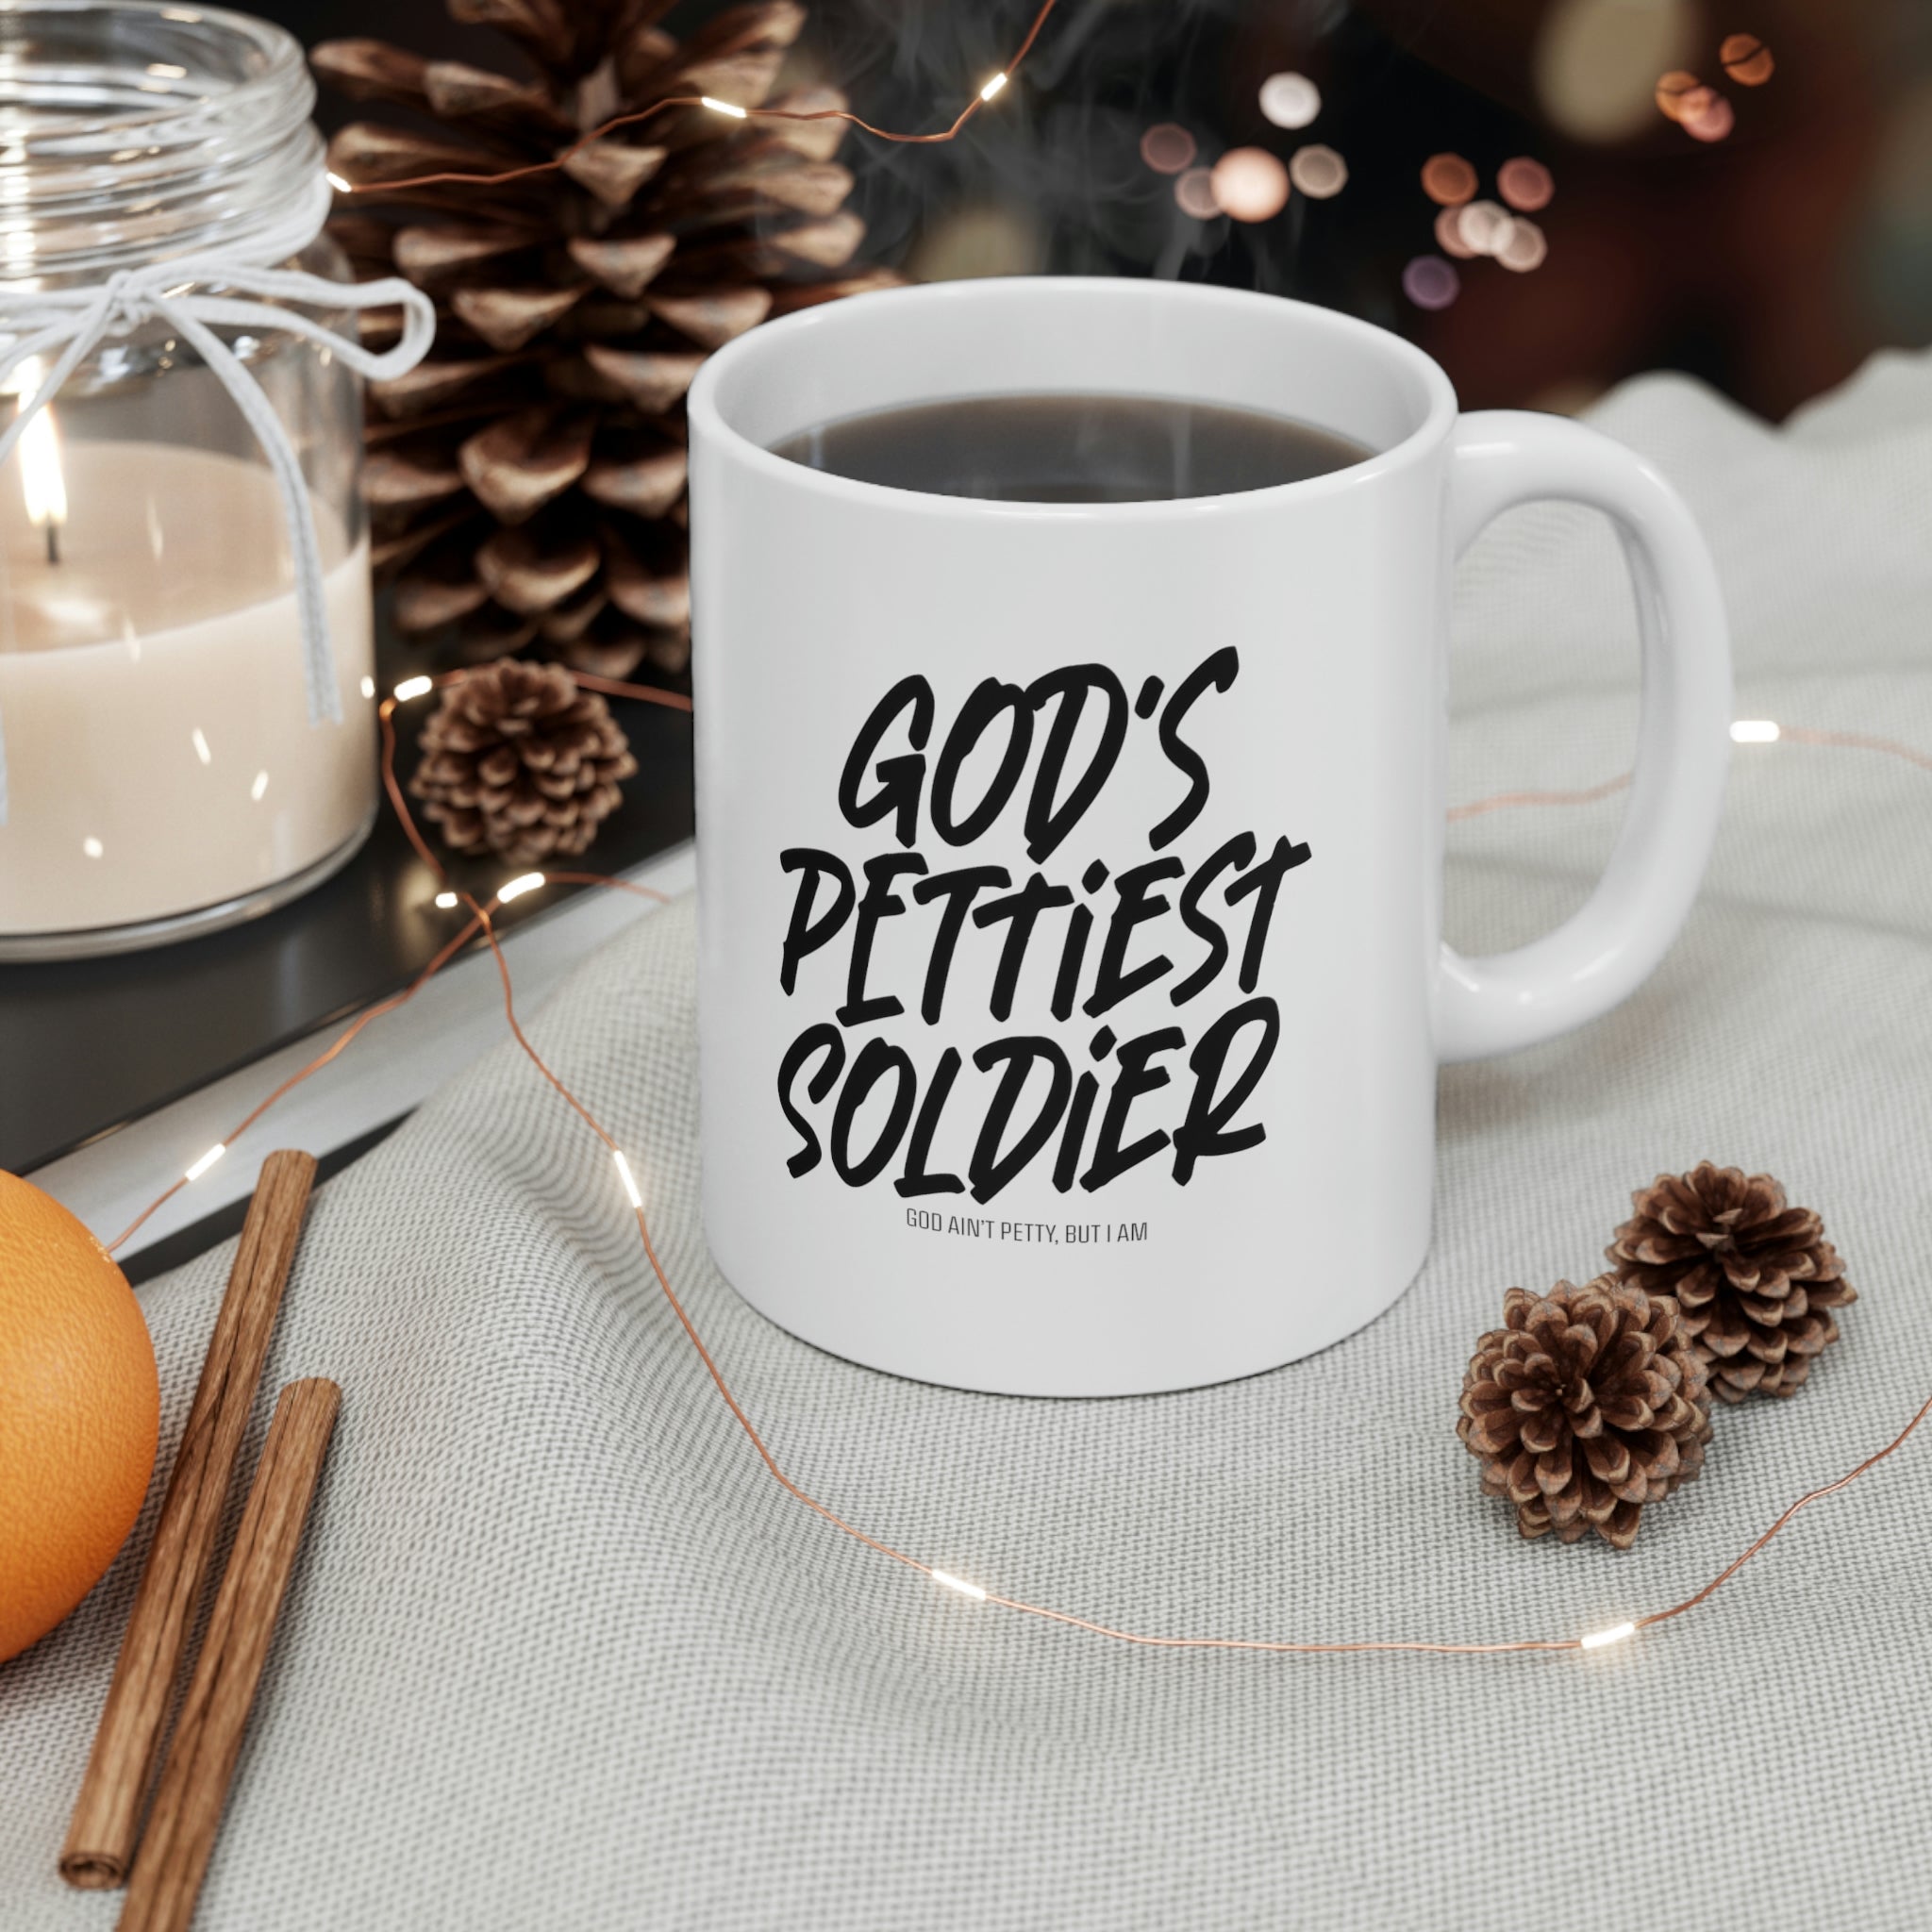 God's Pettiest Soldier Mug 11oz (White & Black)-Mug-The Original God Ain't Petty But I Am